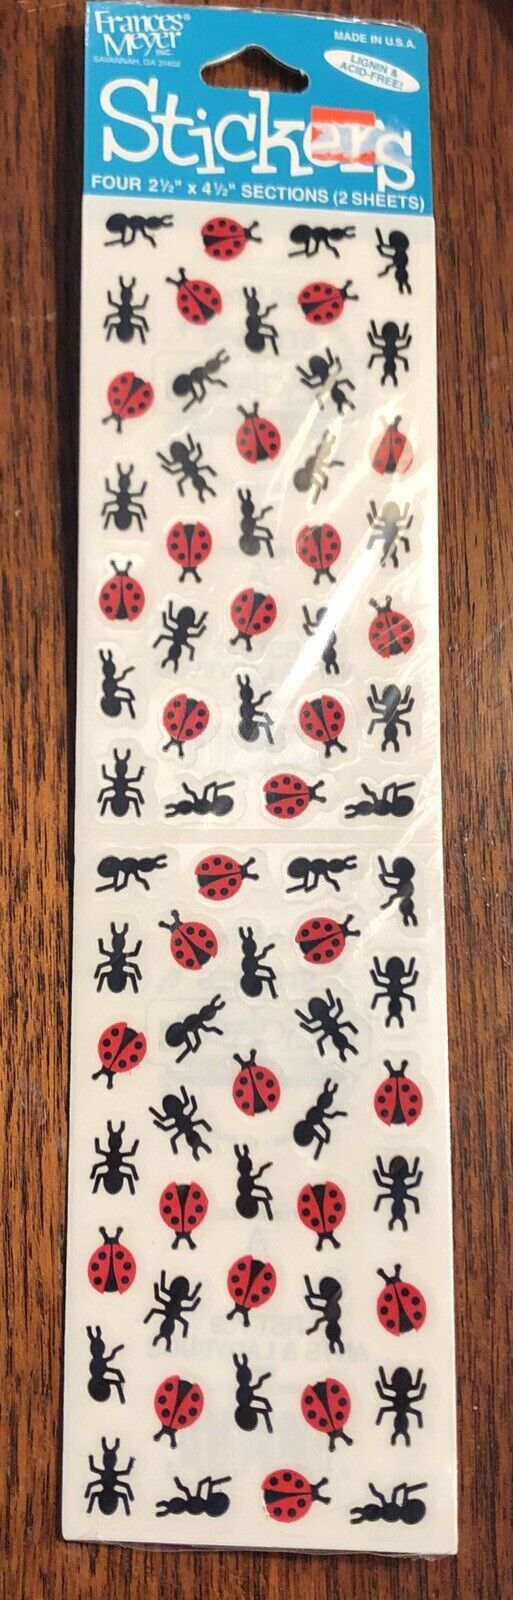 VTG FMI Frances Meyer 1 Sticker Sheet Garden Insects 2 sheets 739 Ants Ladybugs